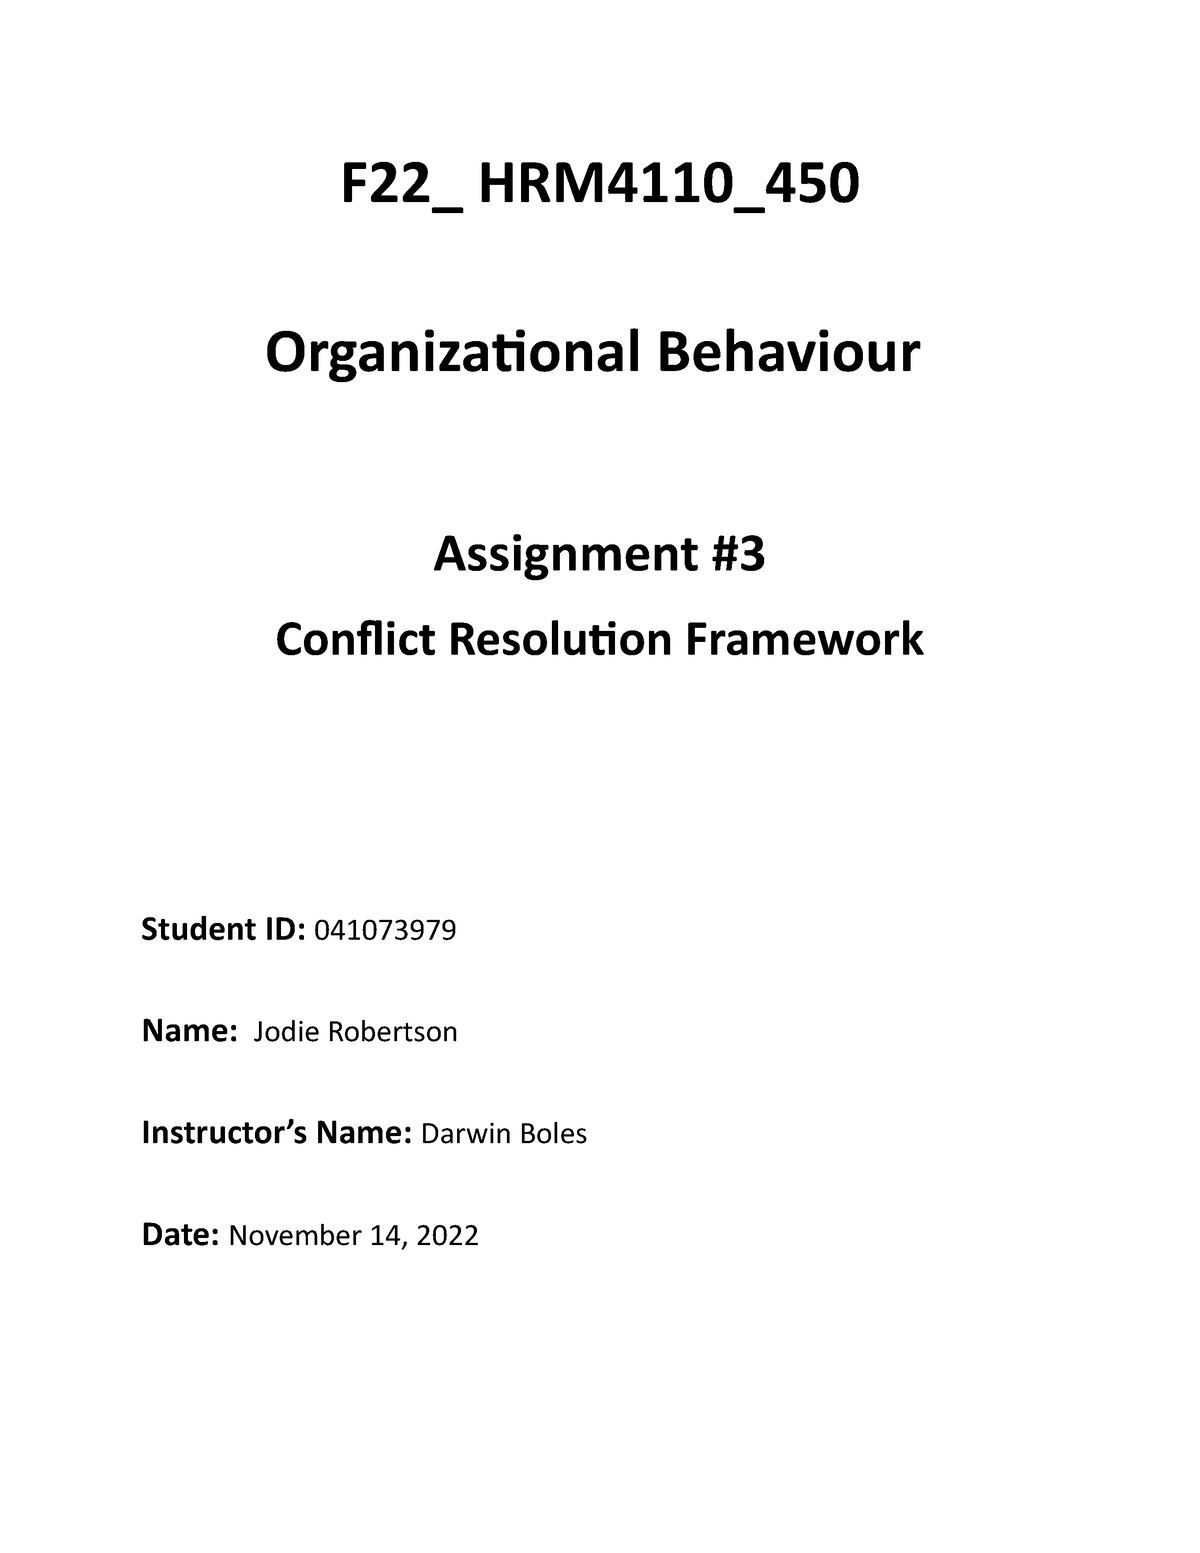 organizational behaviour assignment answers